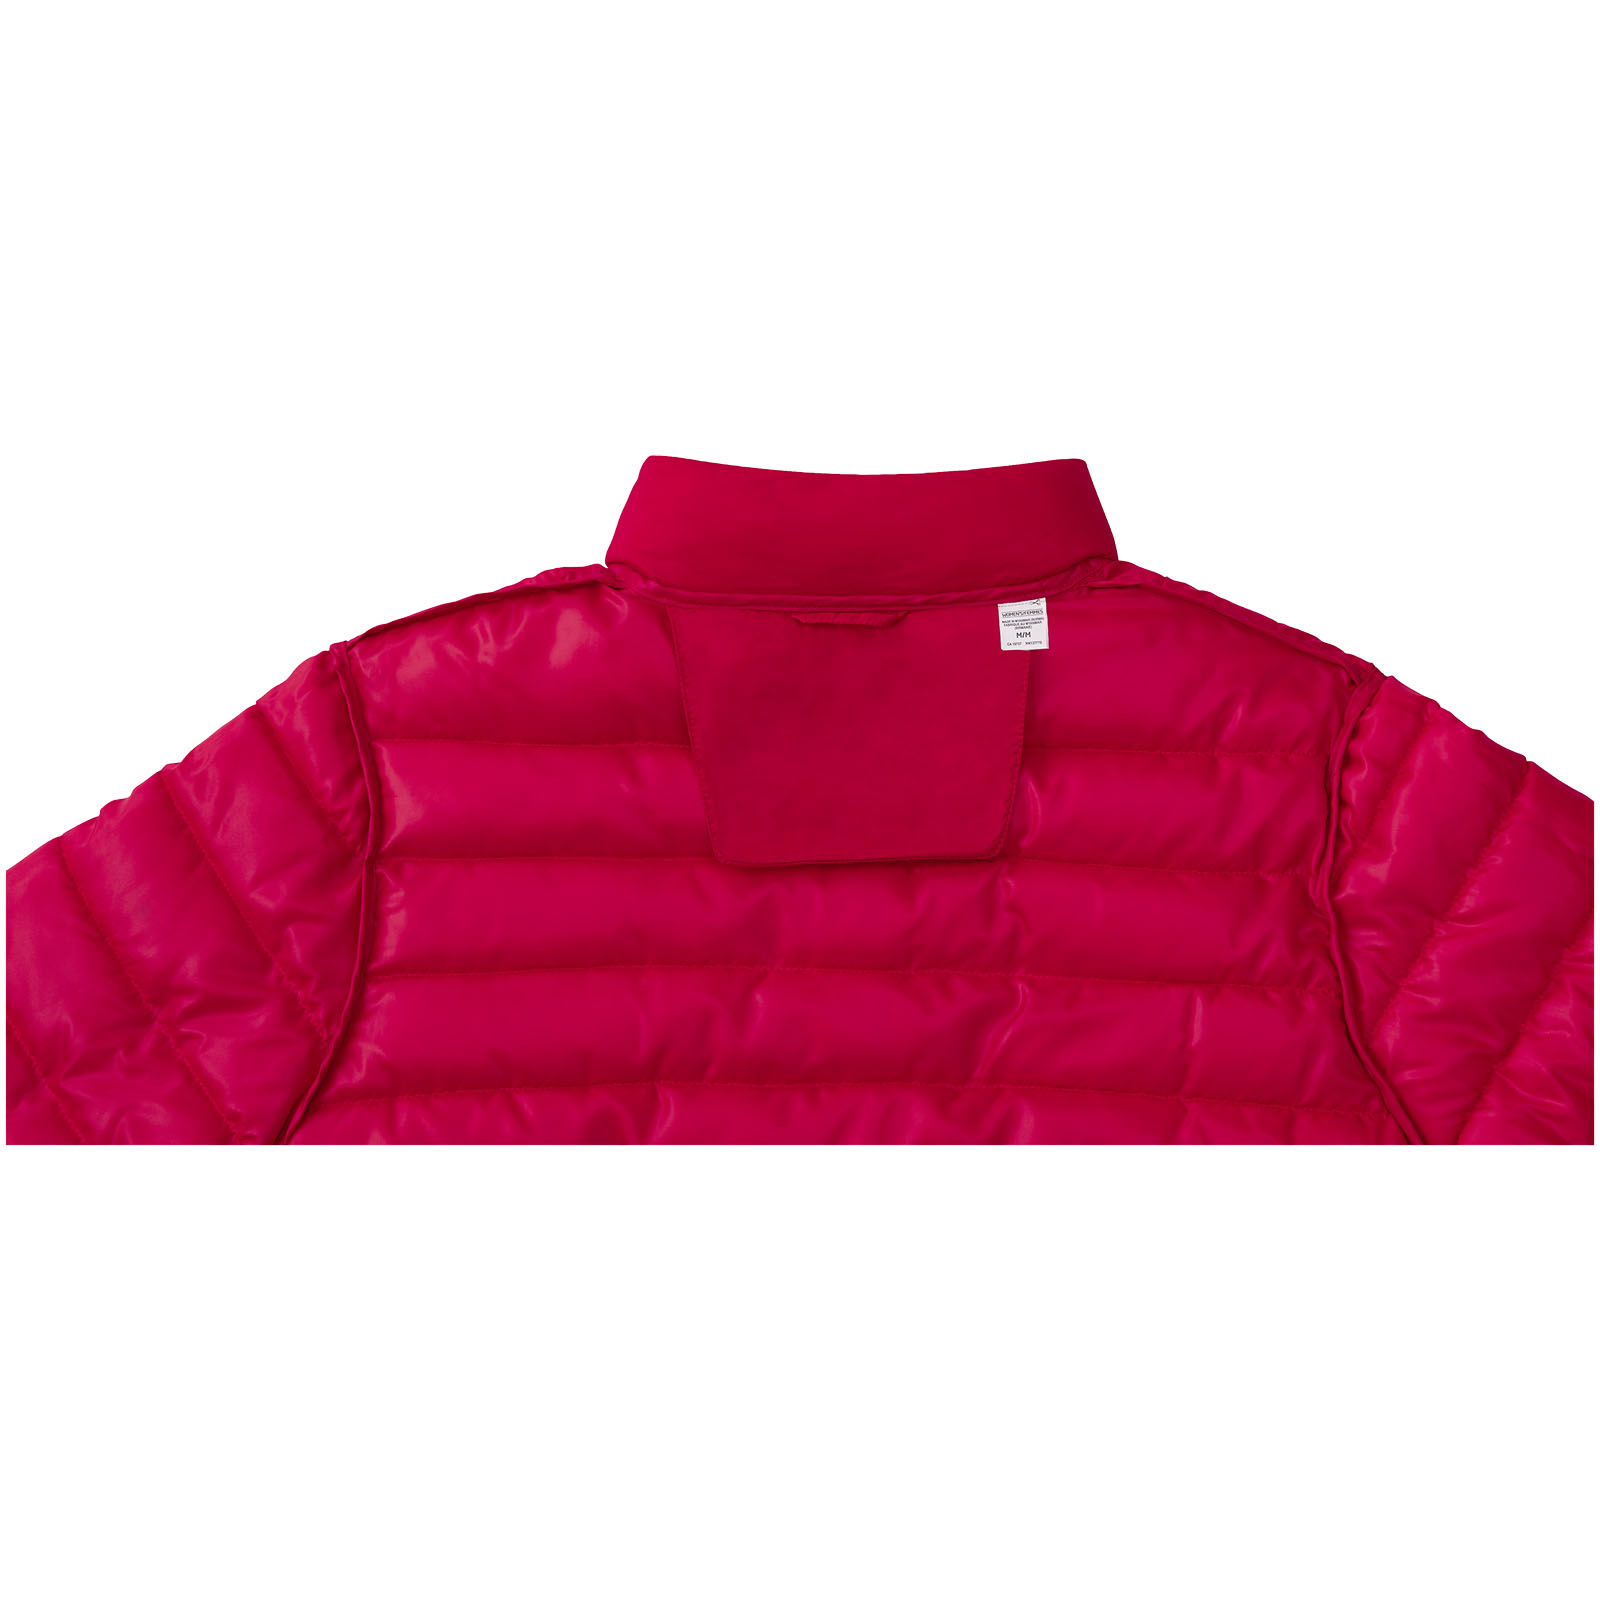 Advertising Jackets - Athenas women's insulated jacket - 3